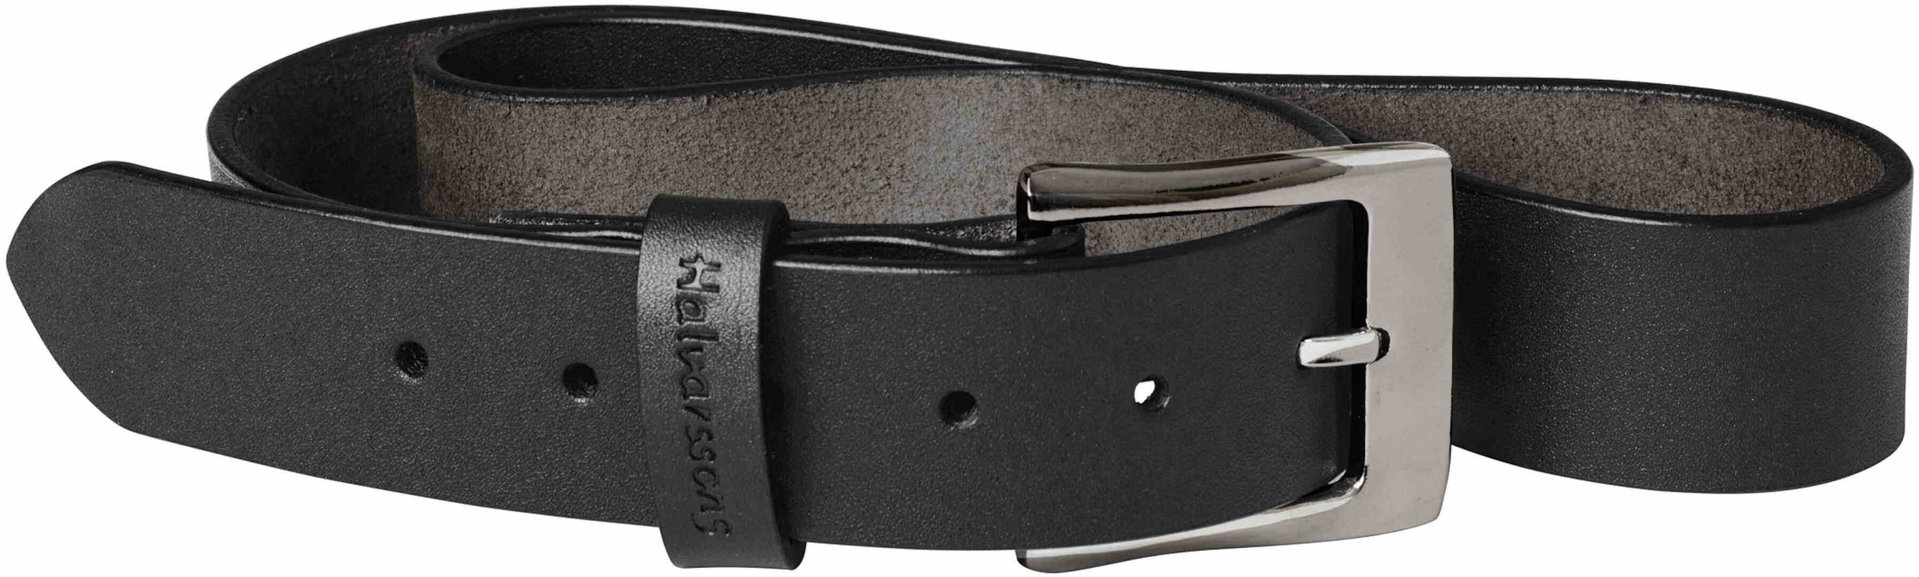 Image of Halvarssons Leather Cintura, nero, dimensione S